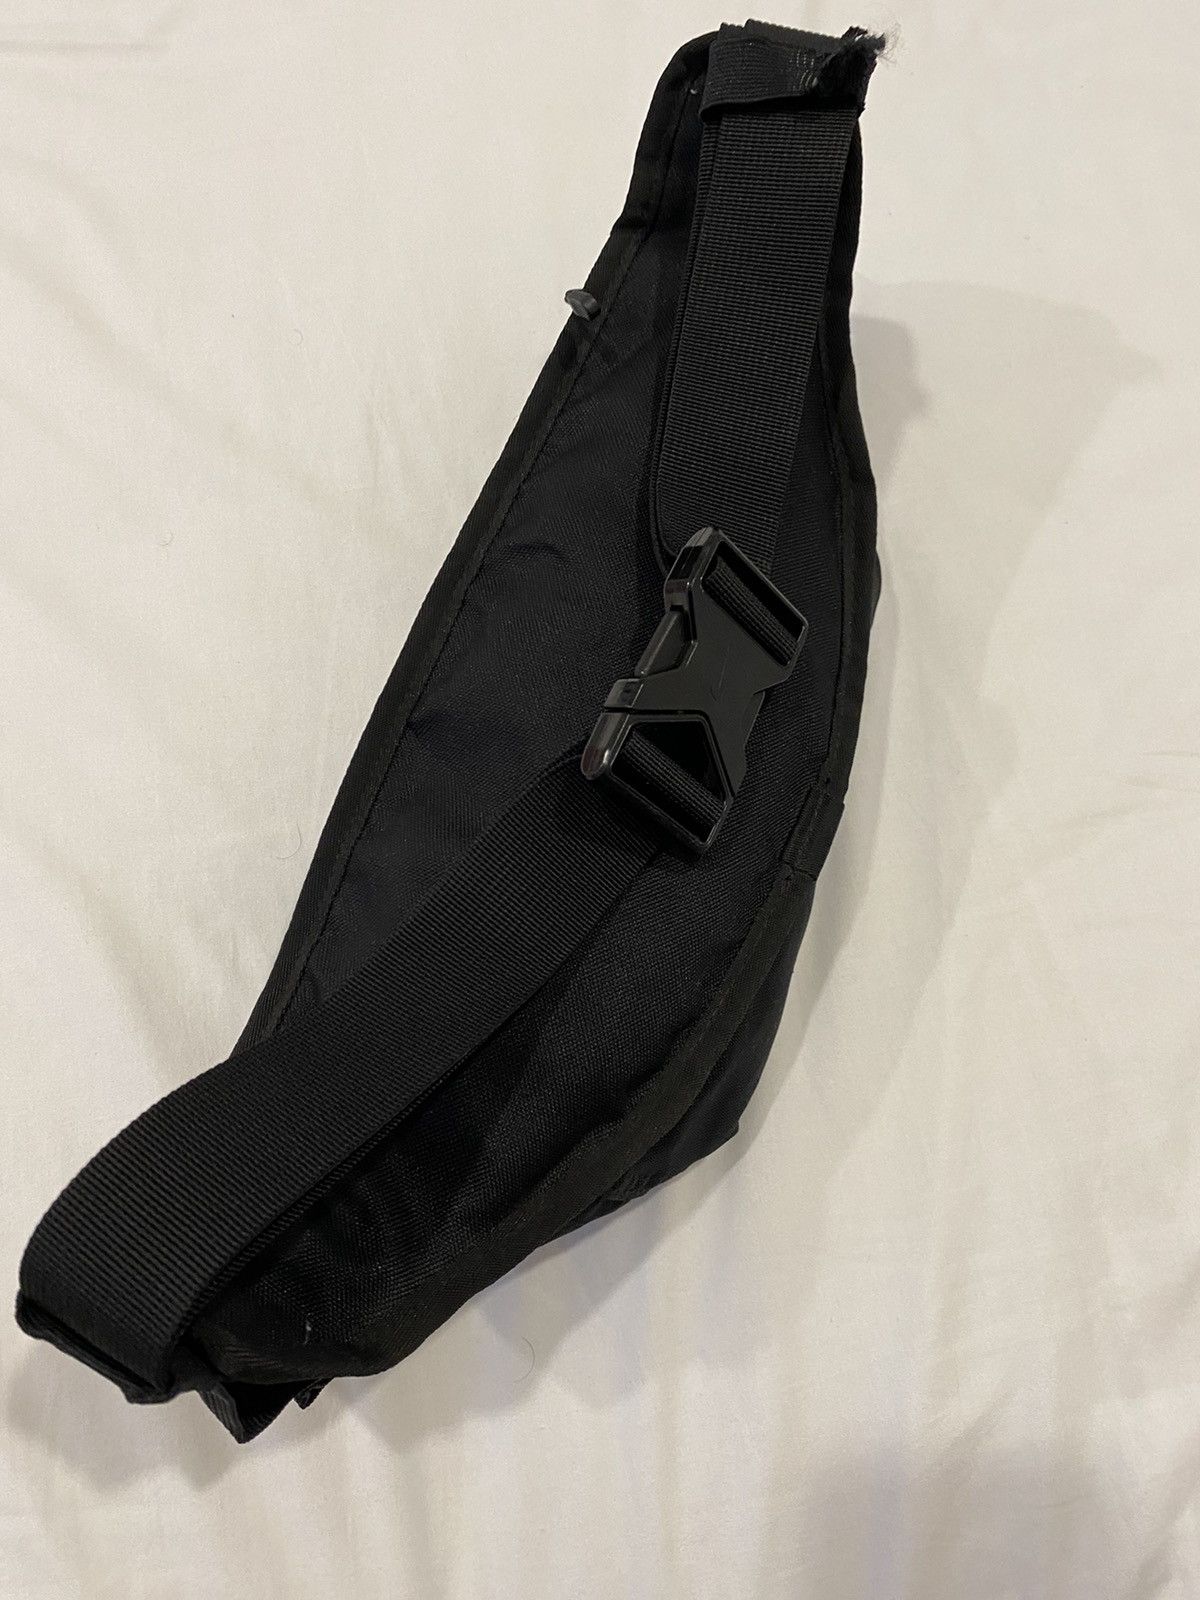 Authentic Nike Waist Pouch Bag - 3